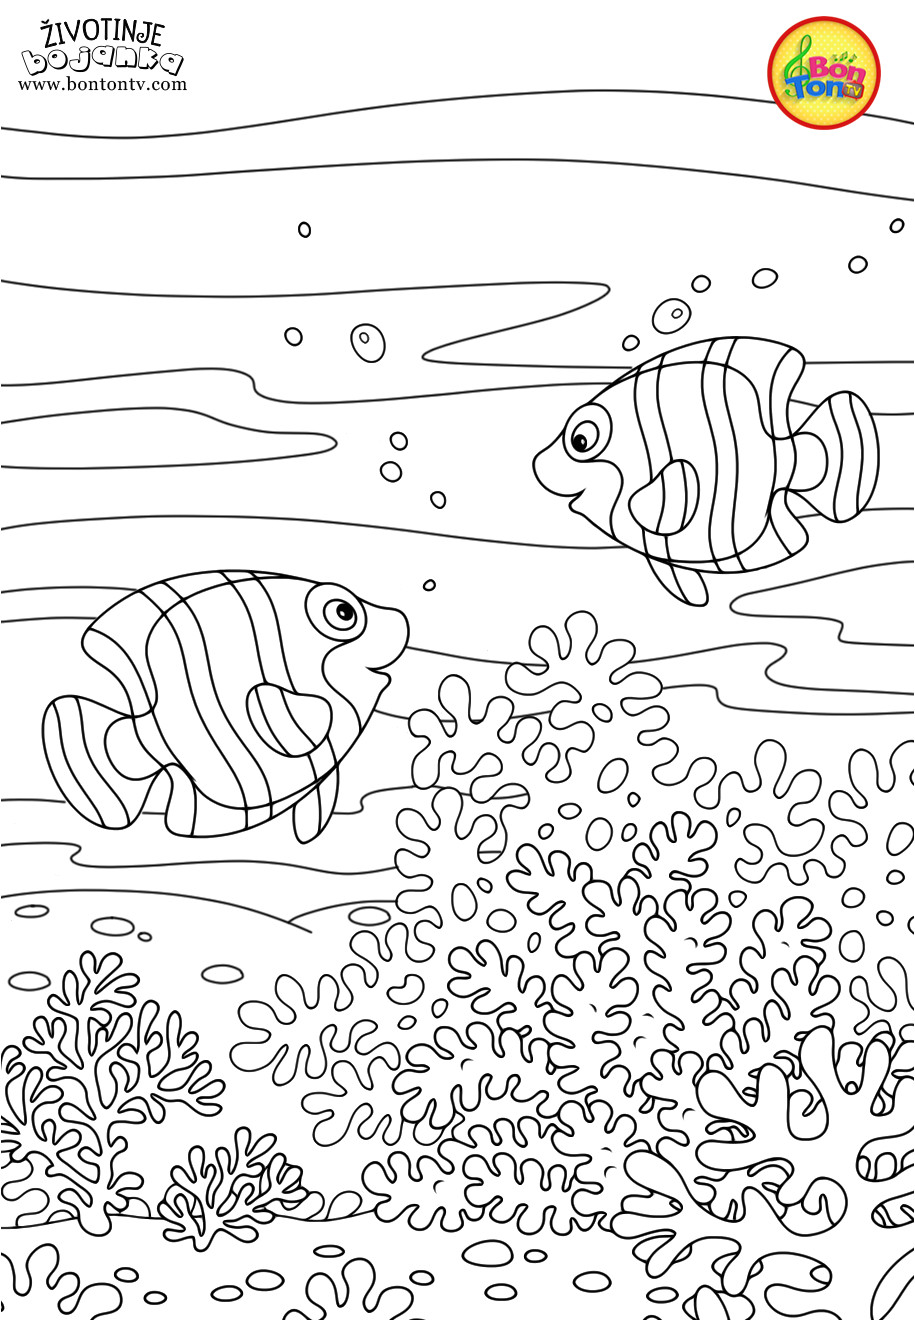 Coloriage D Animaux Pour Enfant Animals Coloring Pages for Kids Free Preschool Printables